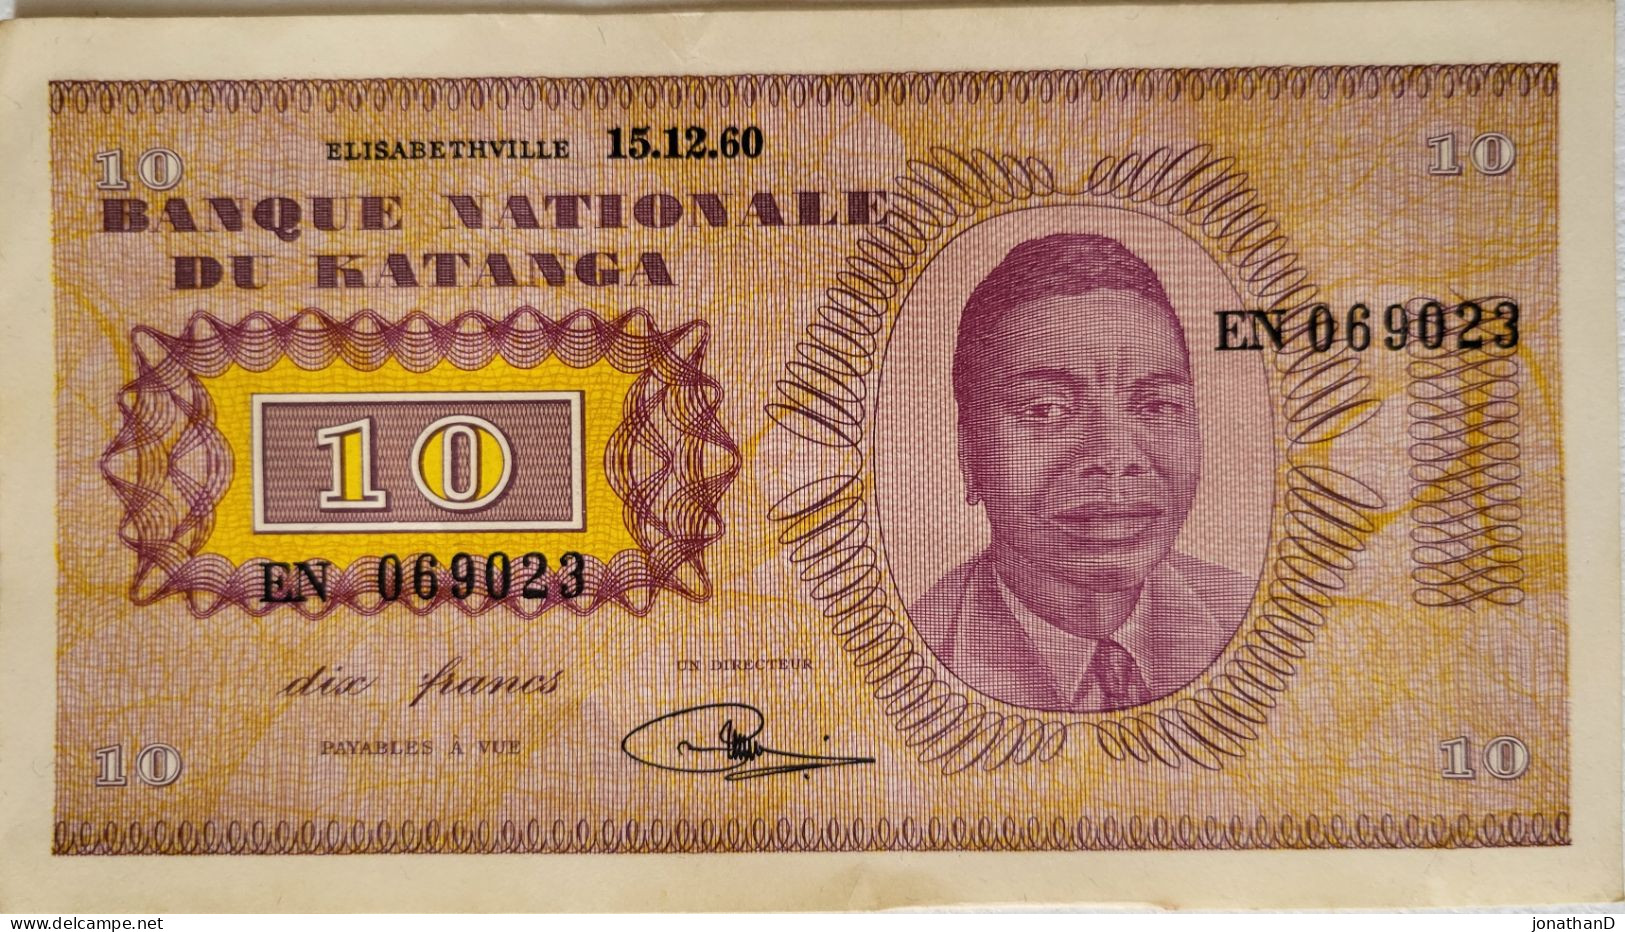 Lot 10 Francs Banque Nationale du Katanga de EN069015 à EN069024 état +++